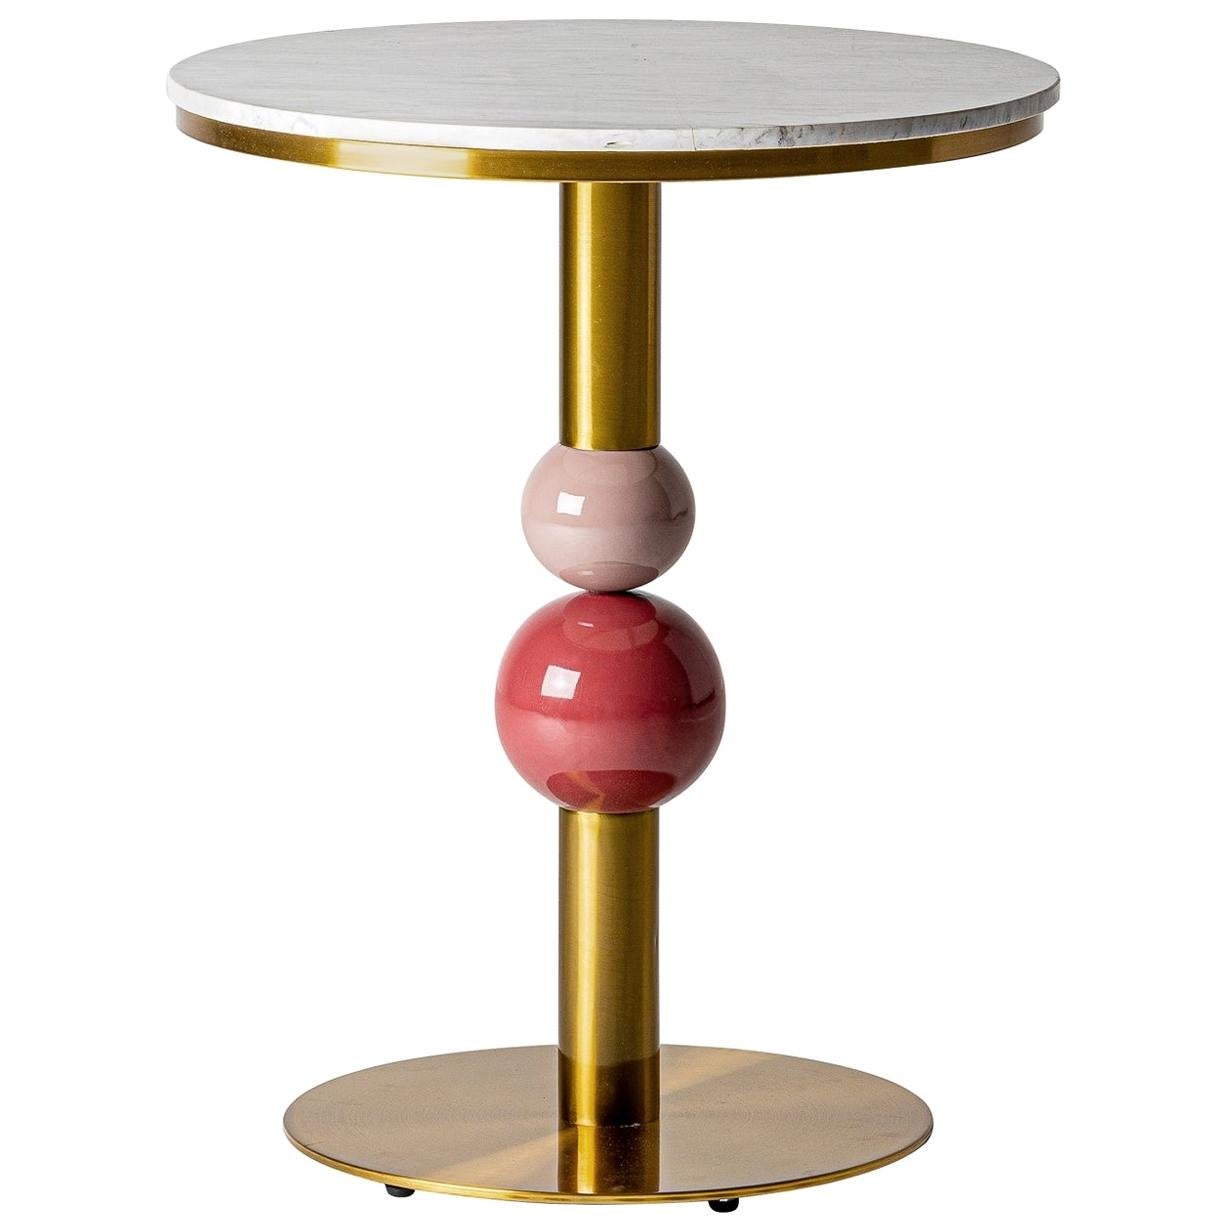 1980s Italian Design Style Round White Marble and Gilt Pedestal Table